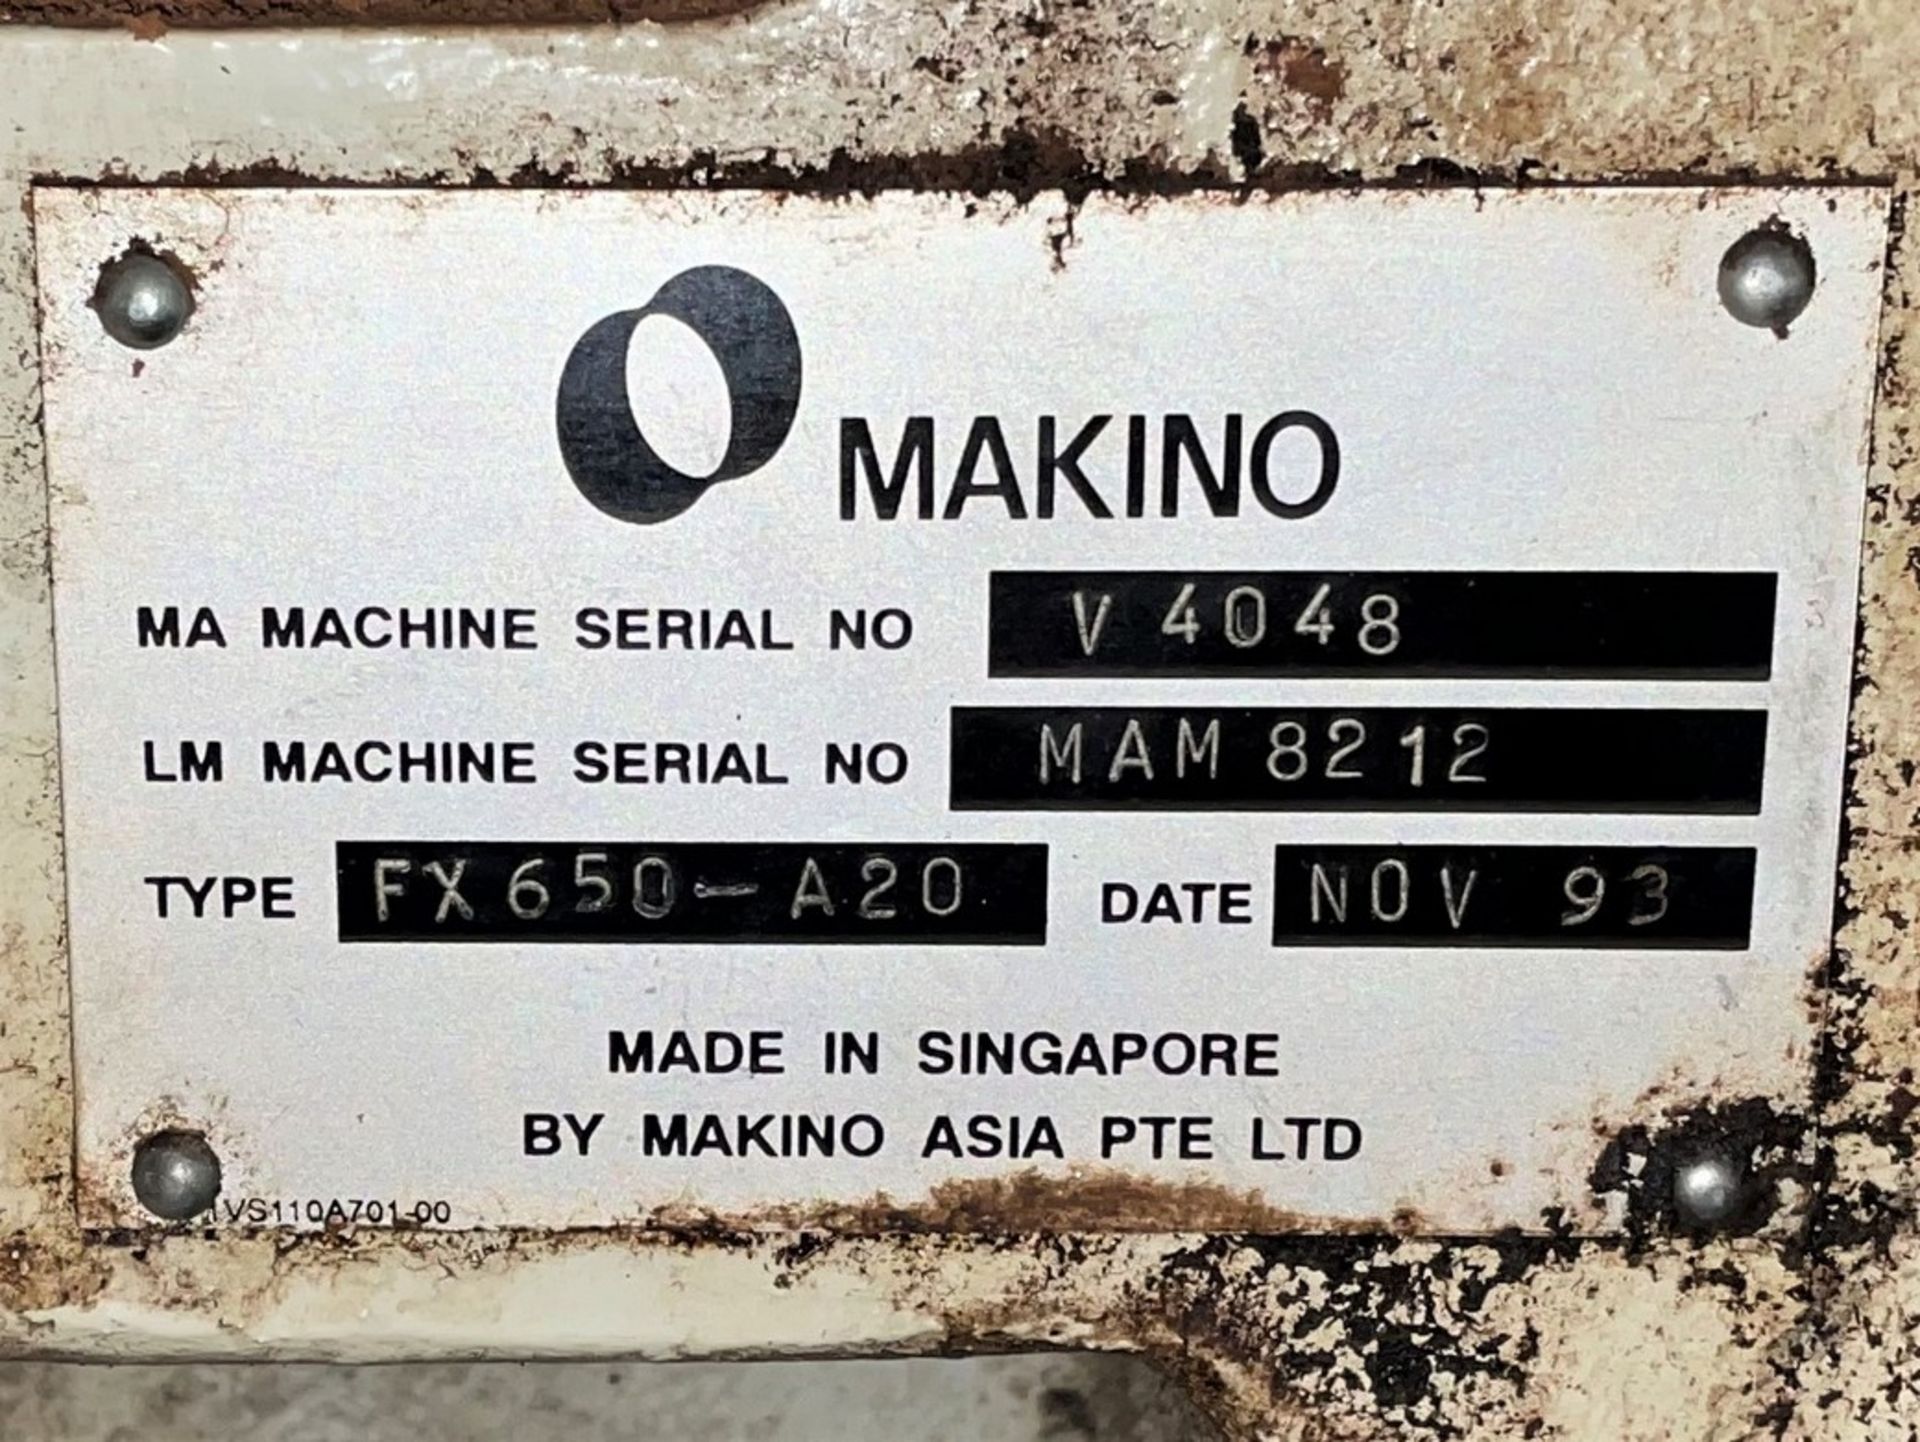 LeBlond Makino FX650-A20 CNC Vertical Machining Center - Image 11 of 11